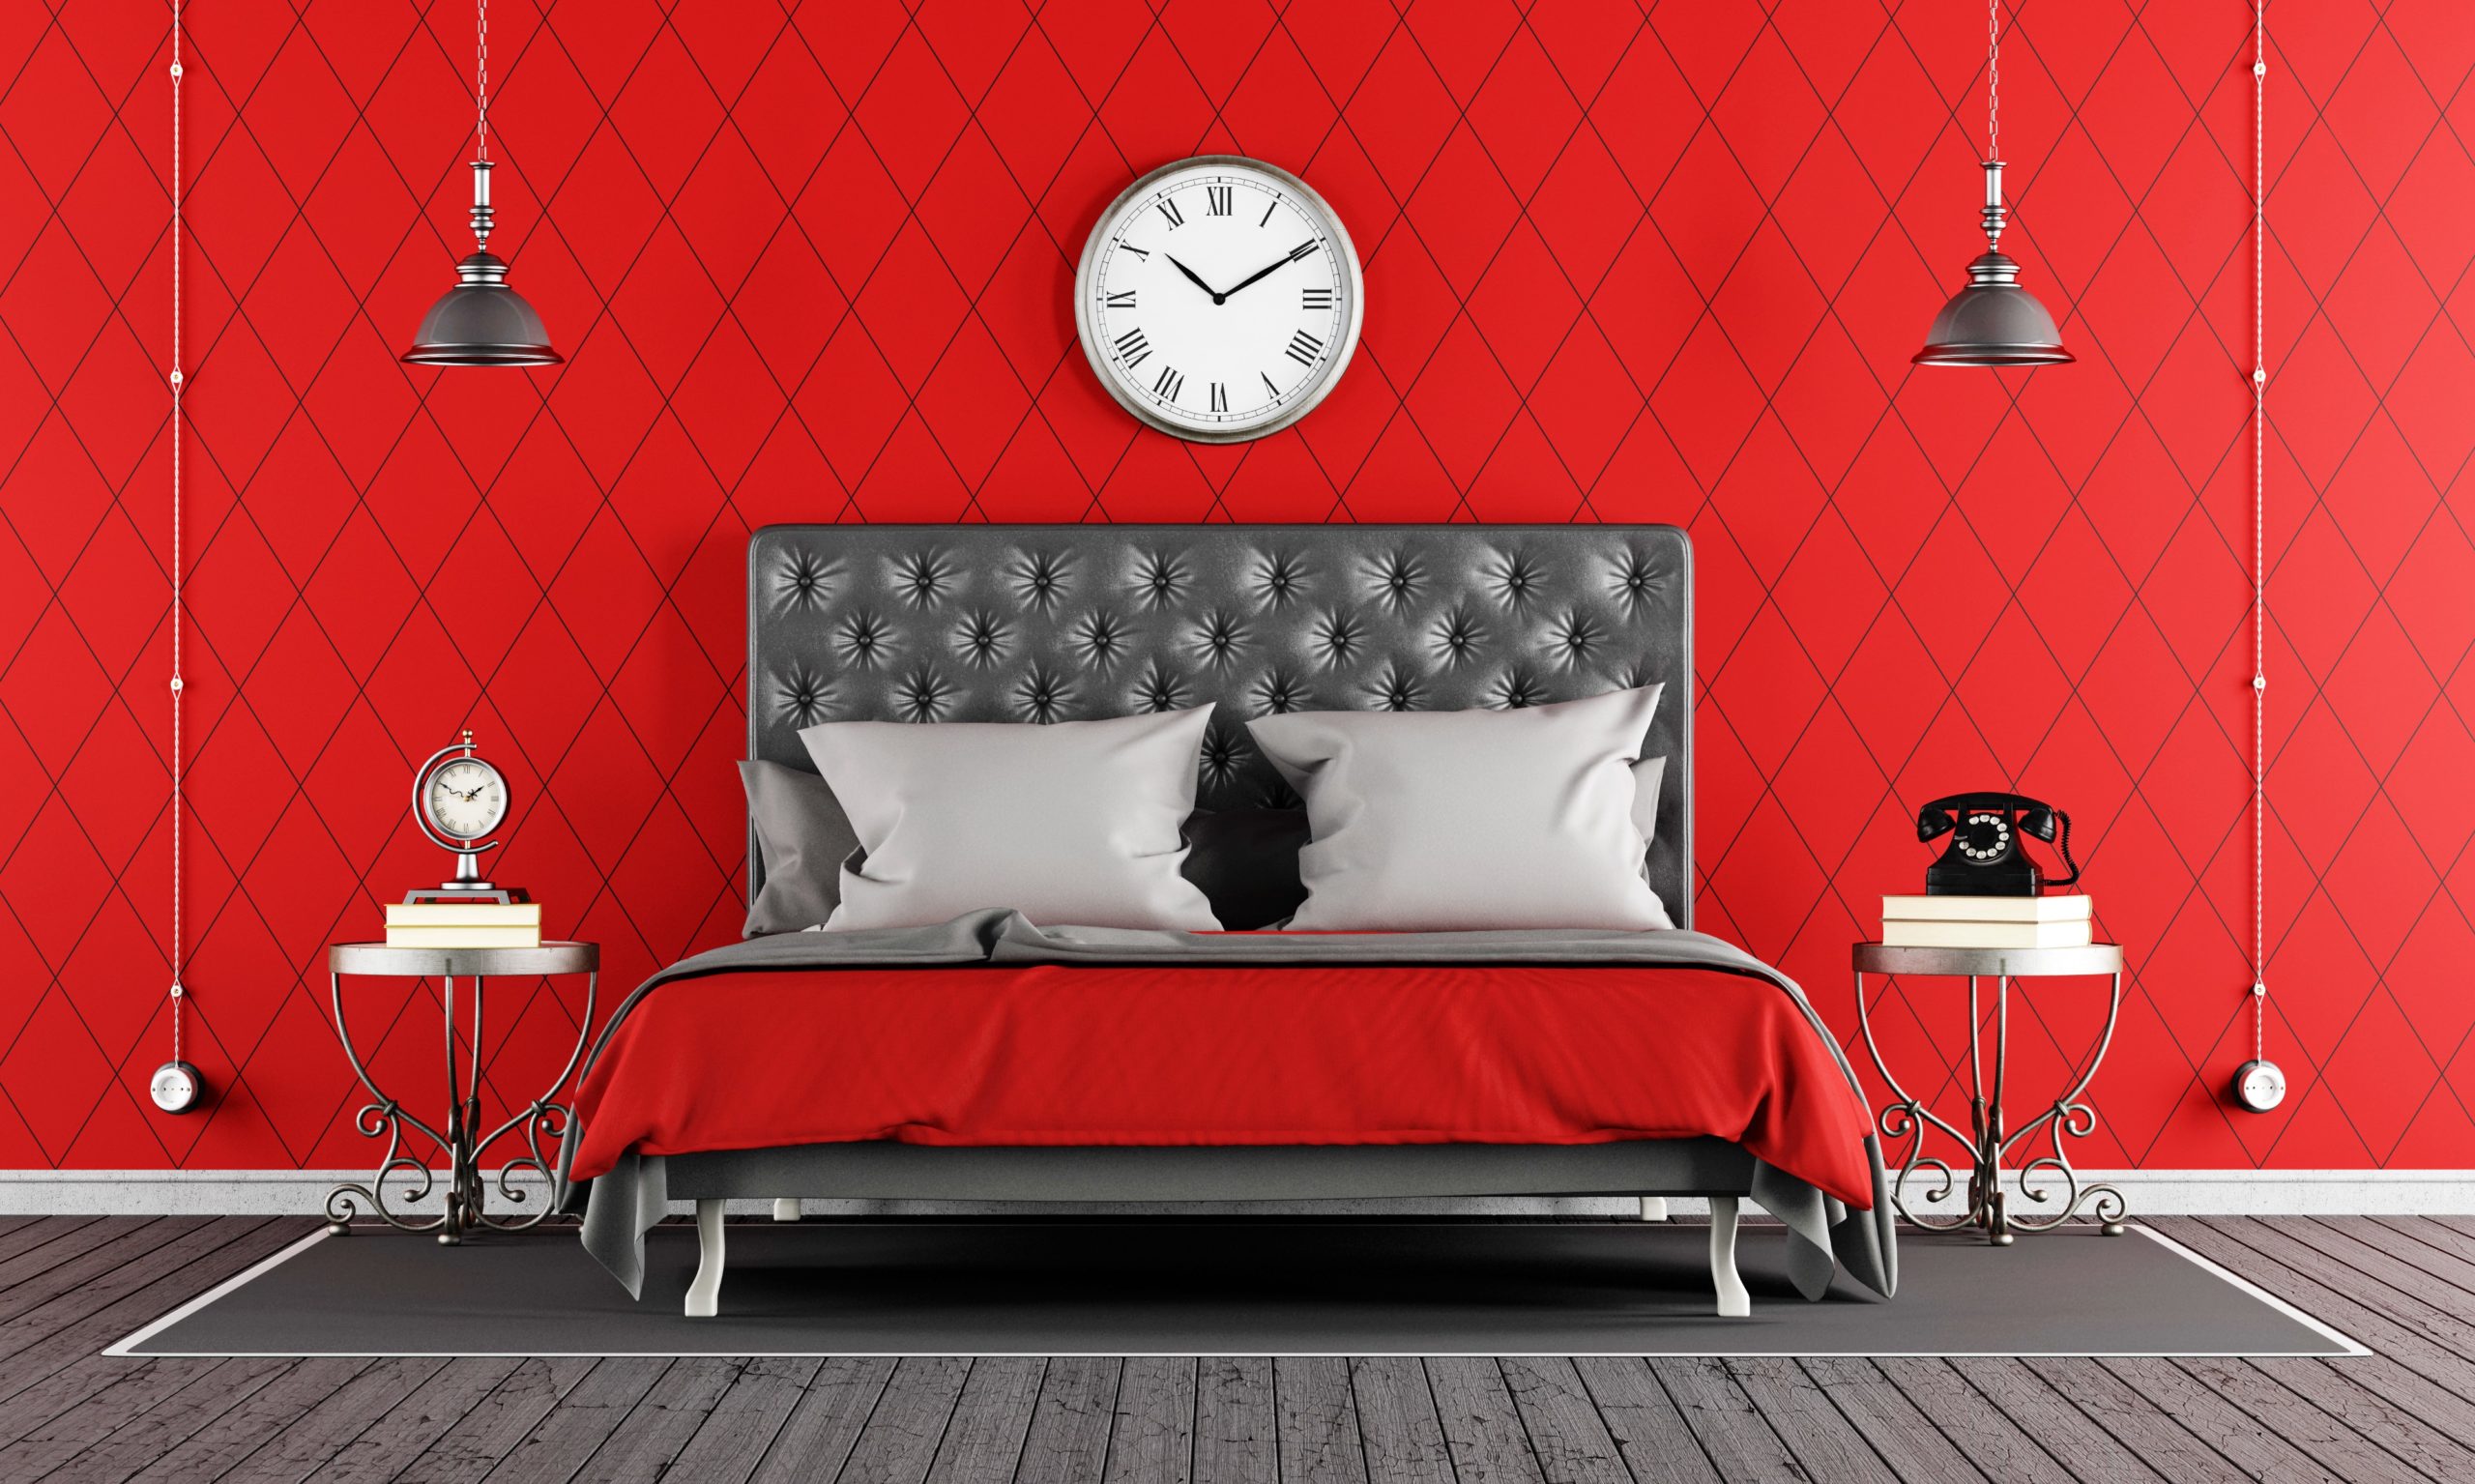 <img src="red.jpg" alt="red and black minimalist bedroom"/> 